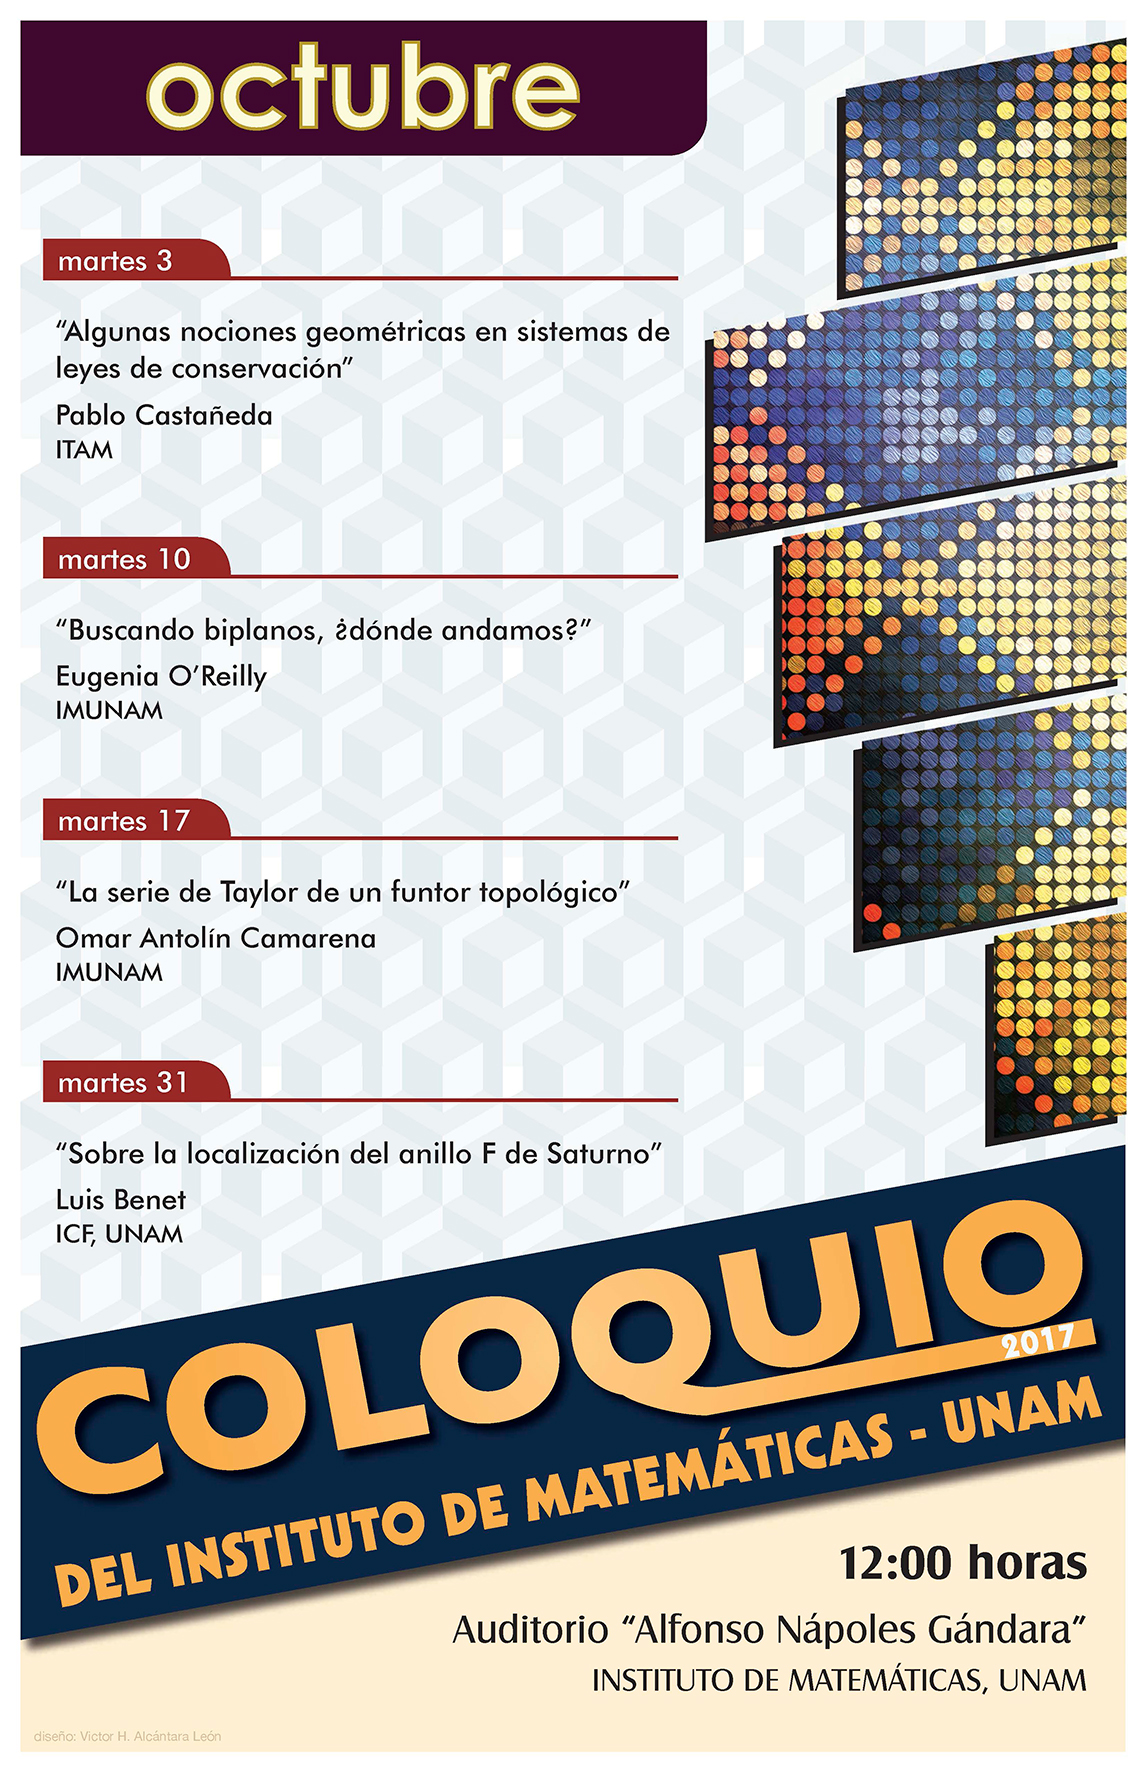 Octubre: Sesiones para Coloquio 